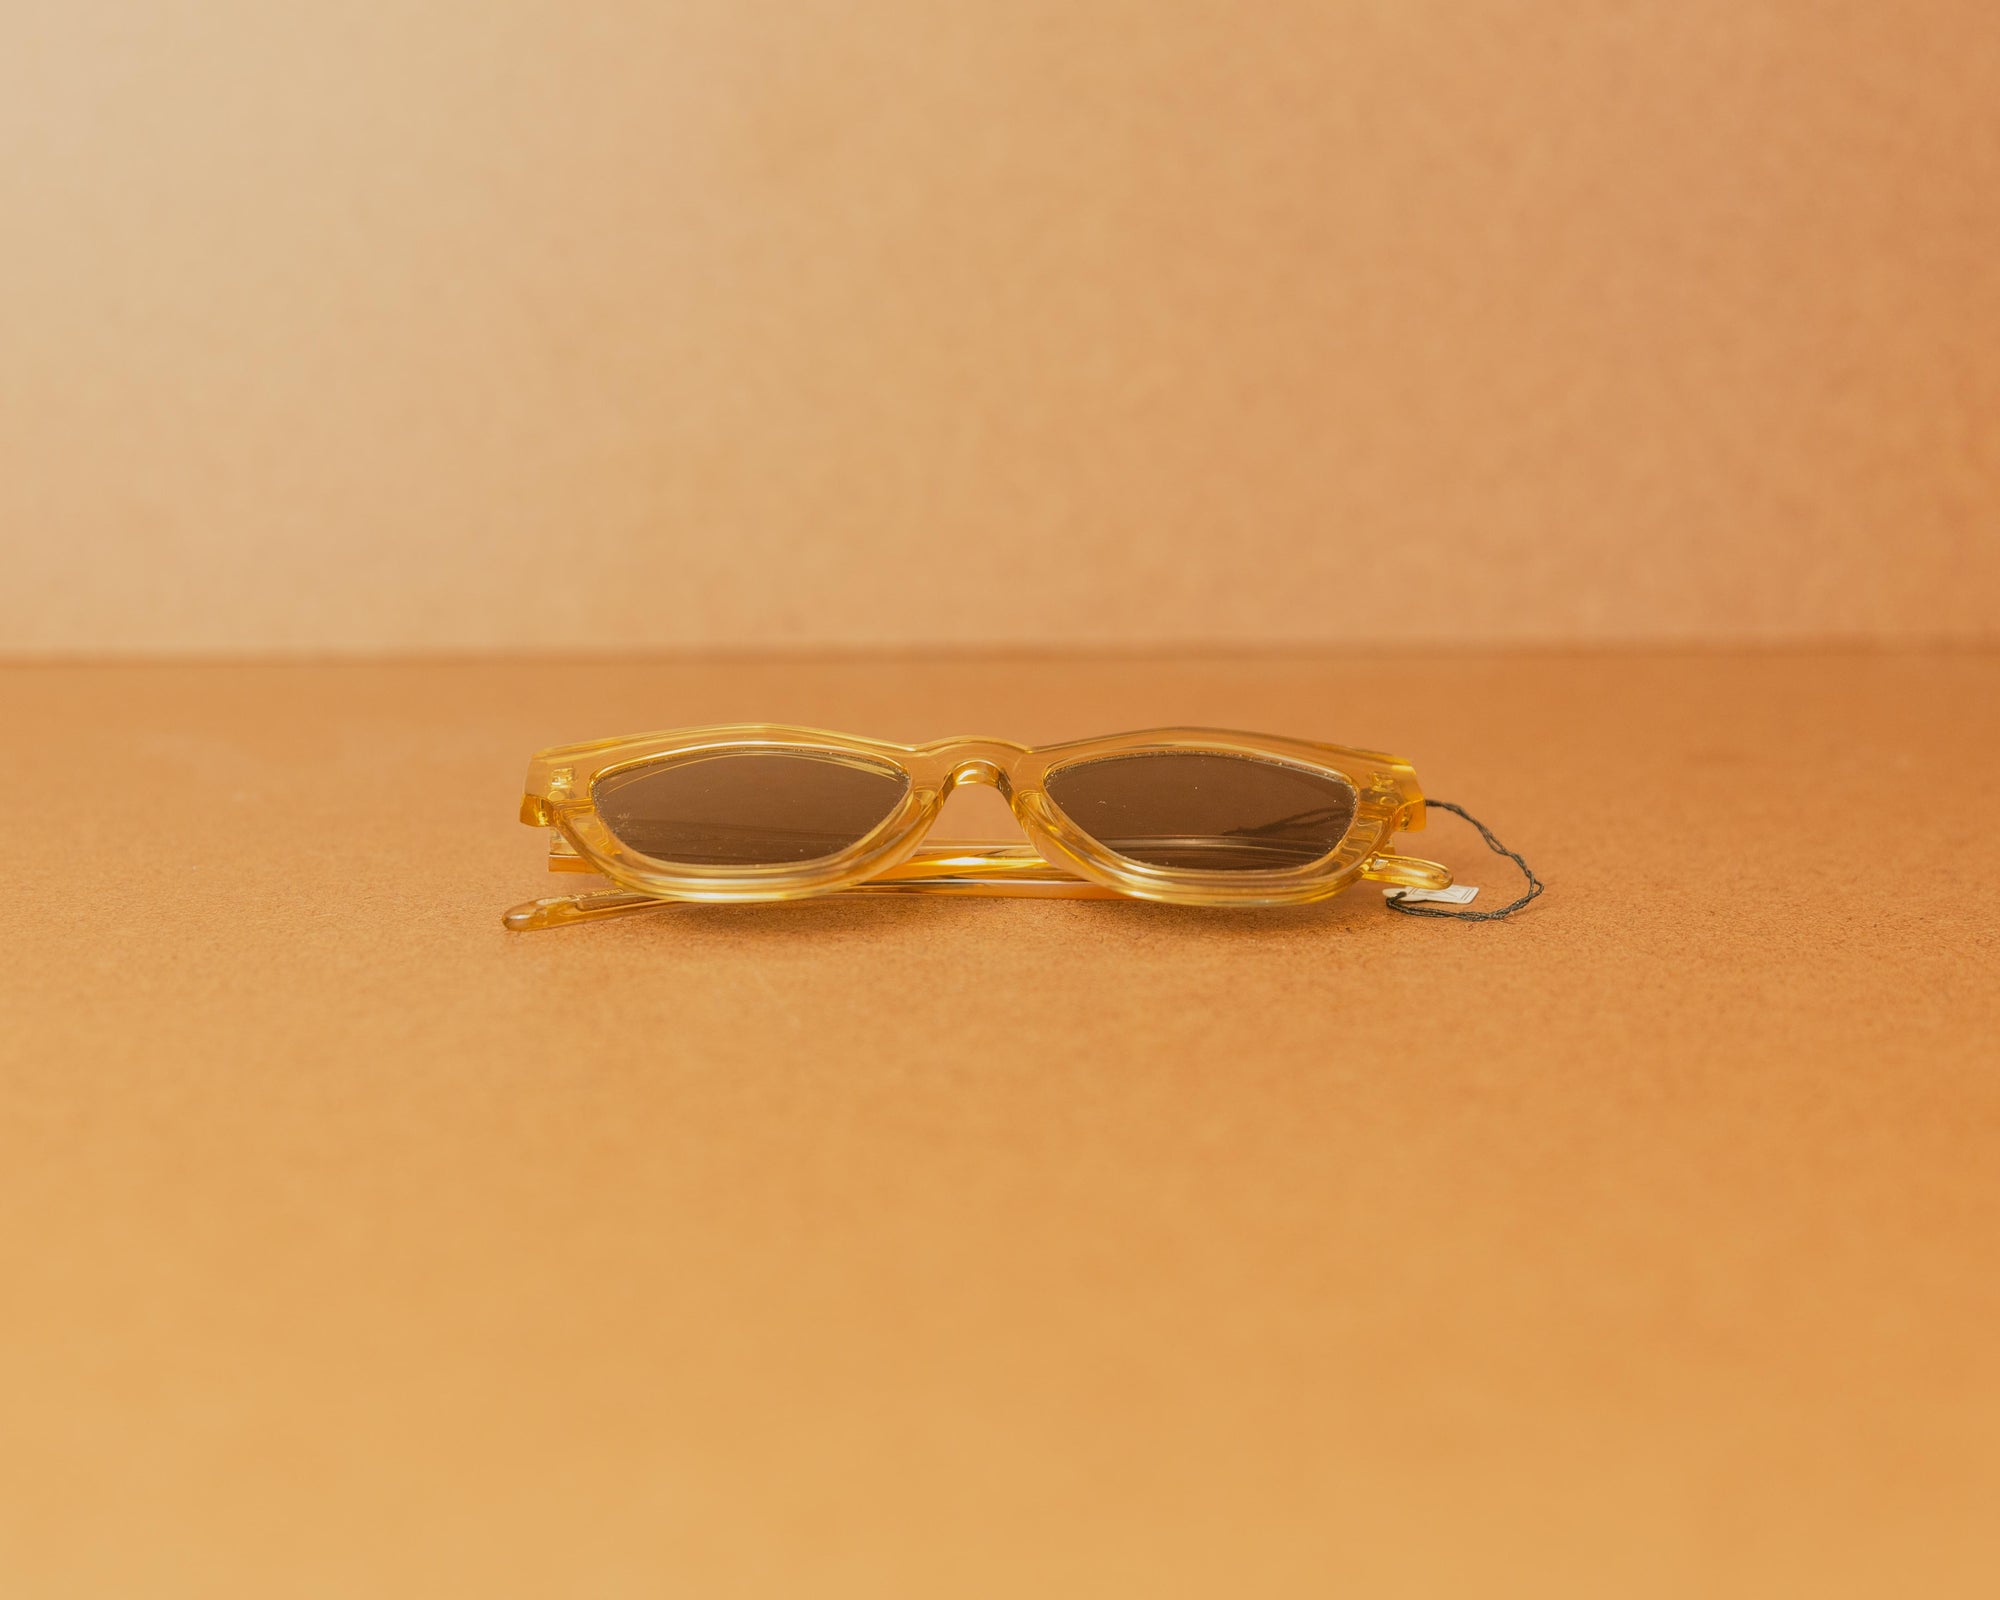 Wonderland ZZYZX Sunglasses in Clear Beach Glass/Green